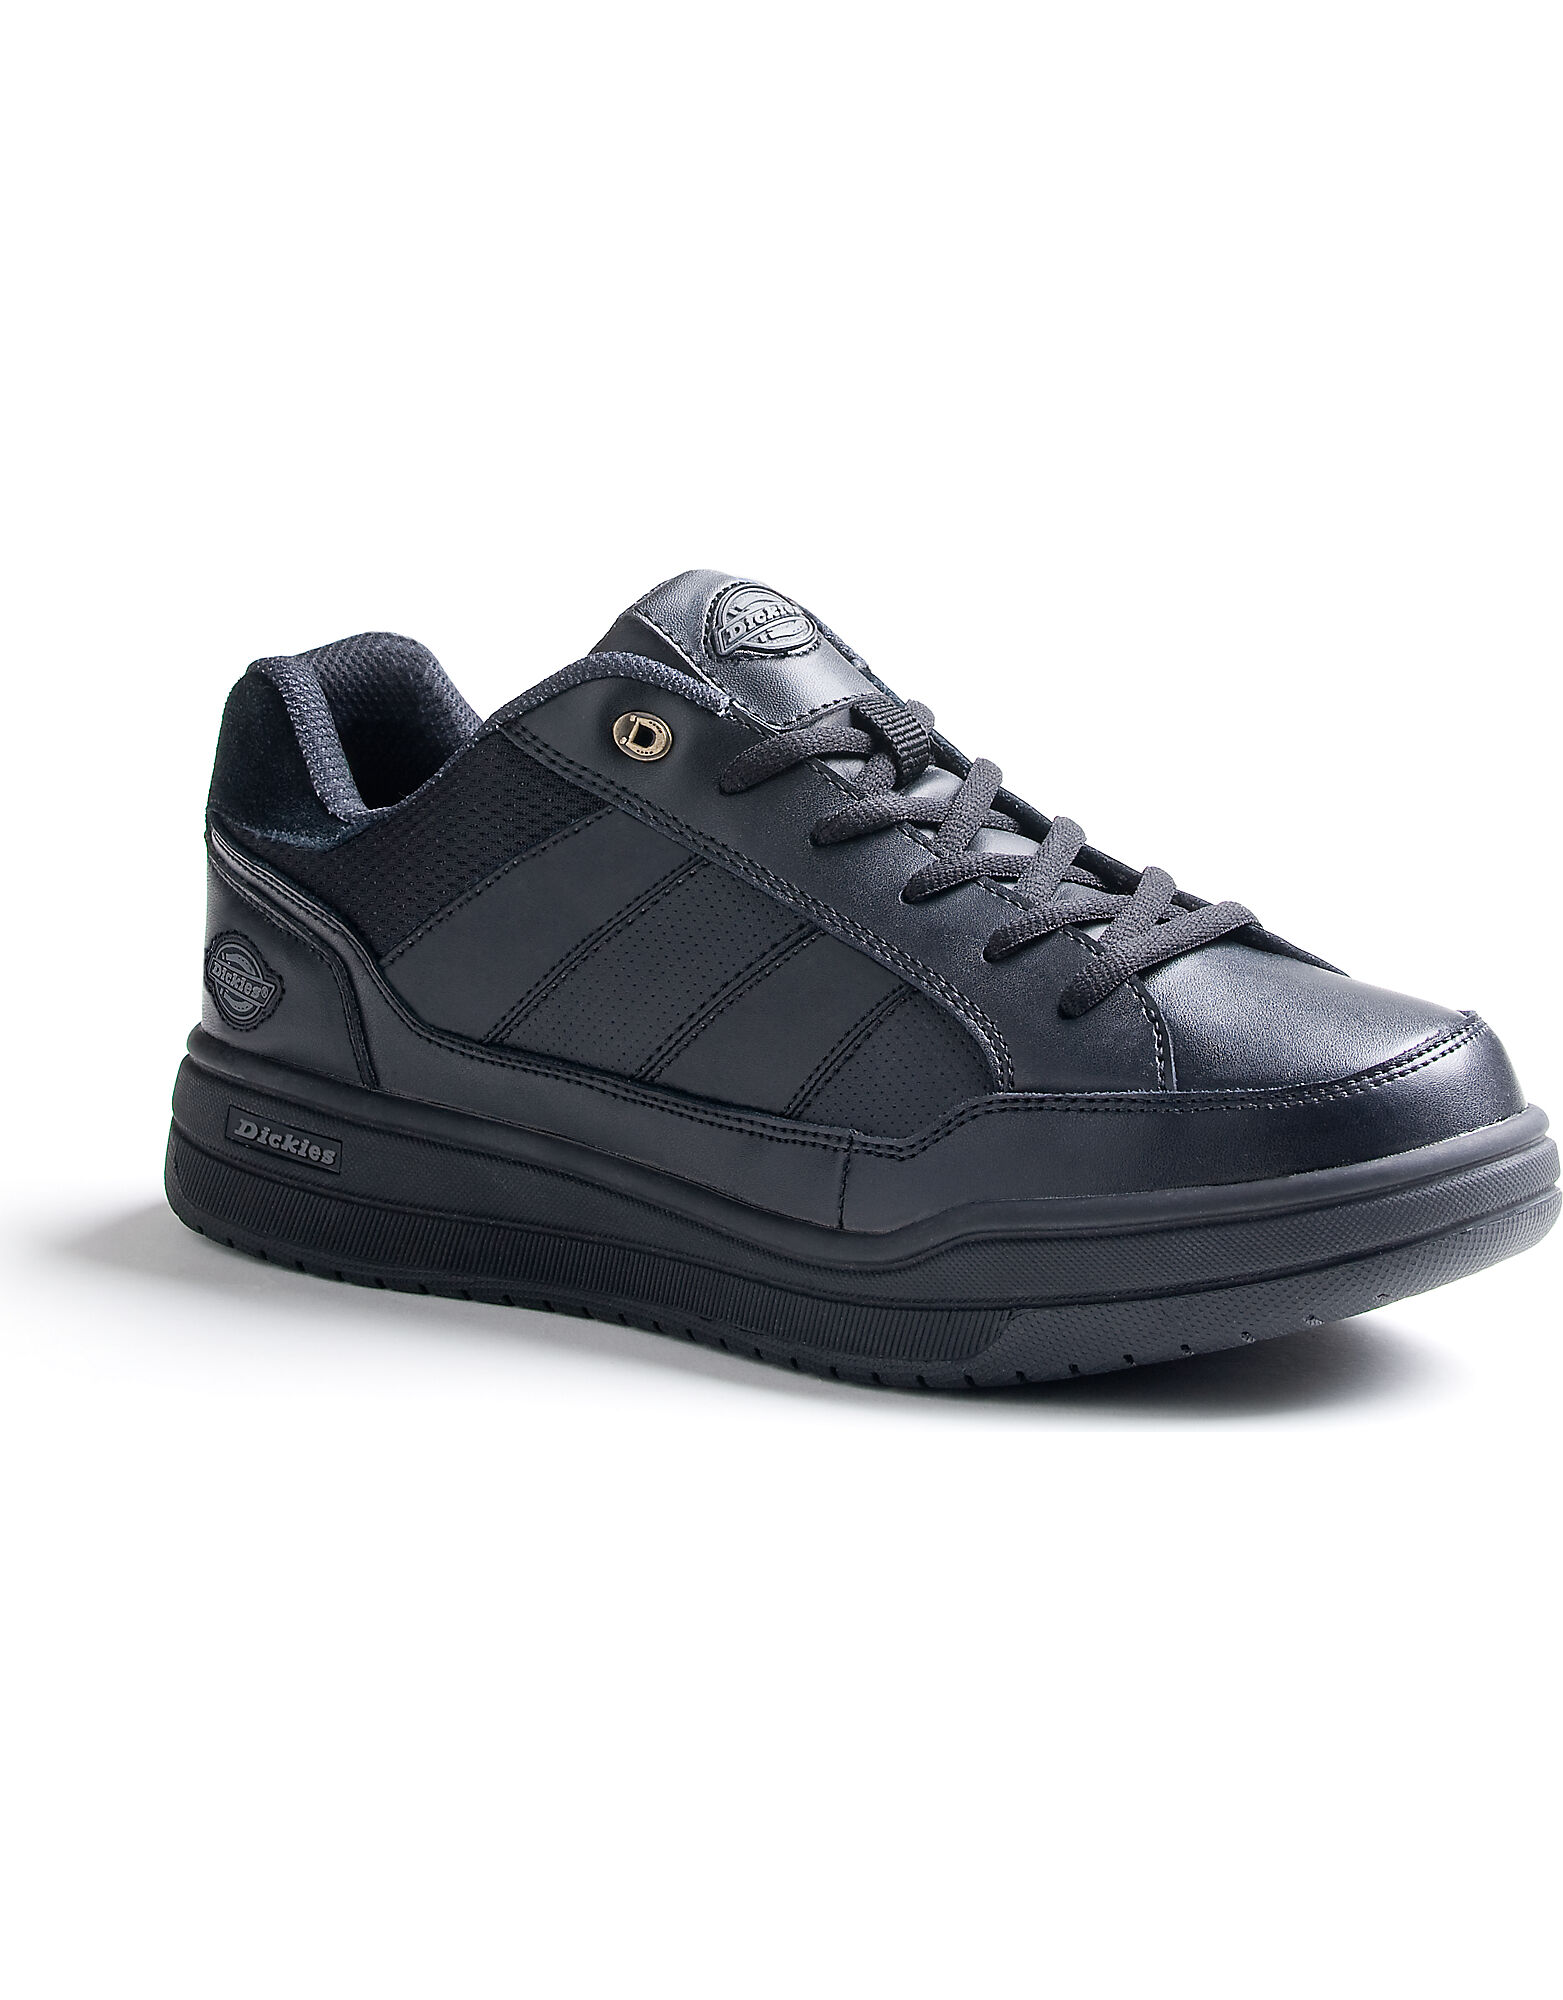 black slip on shoes for work